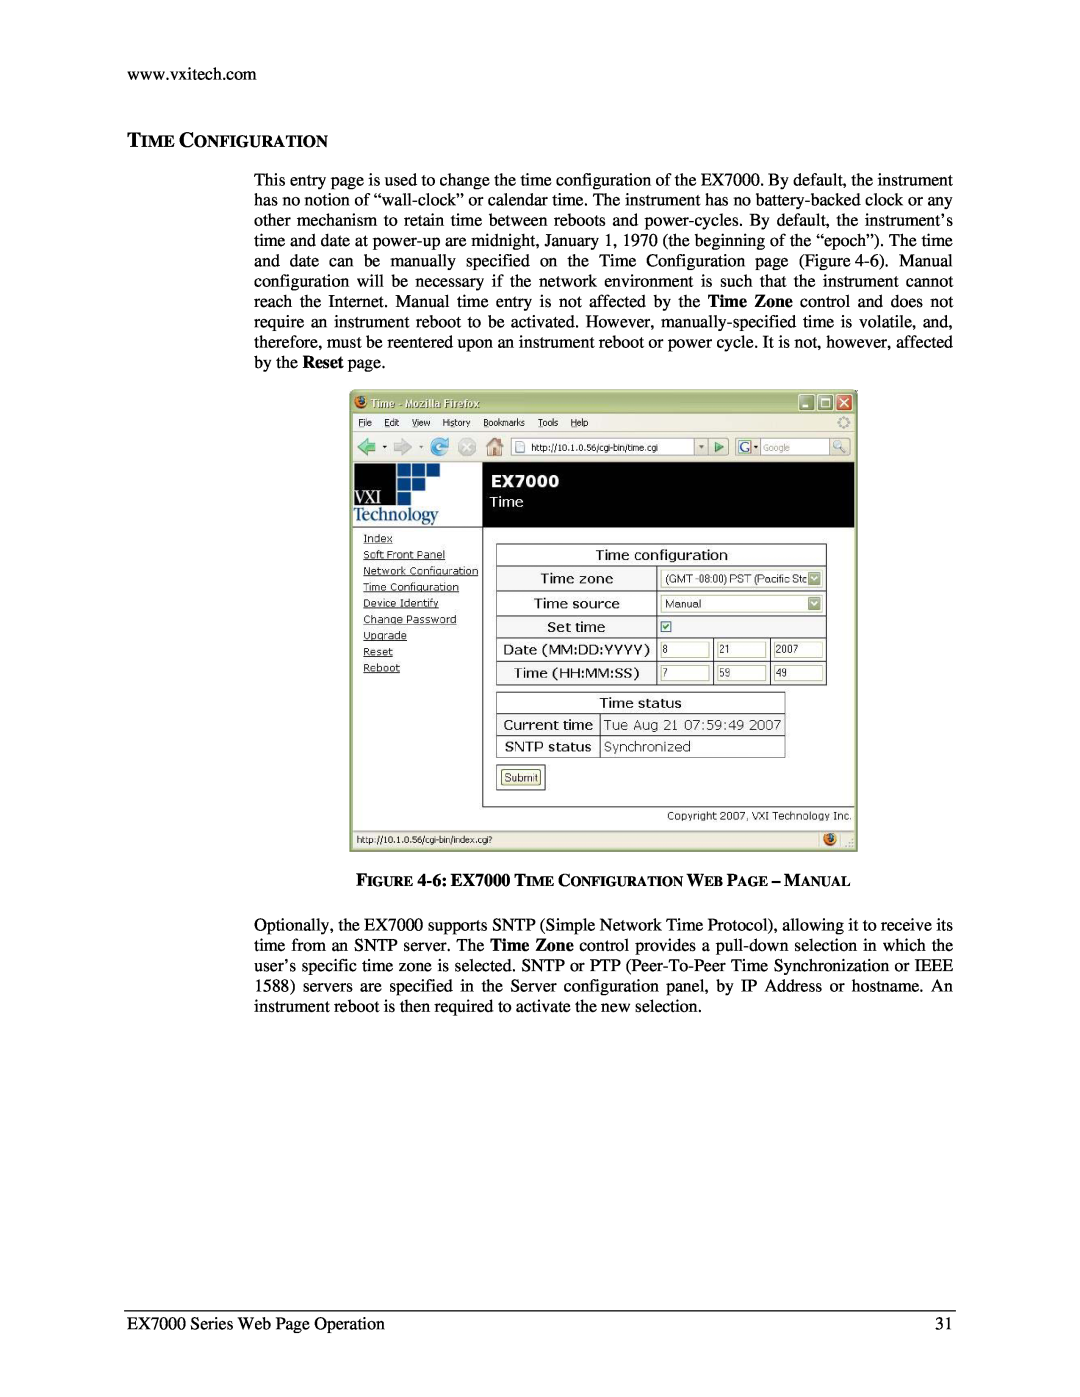 VXI user manual Time Configuration, 6 EX7000 TIME CONFIGURATION WEB PAGE - MANUAL 